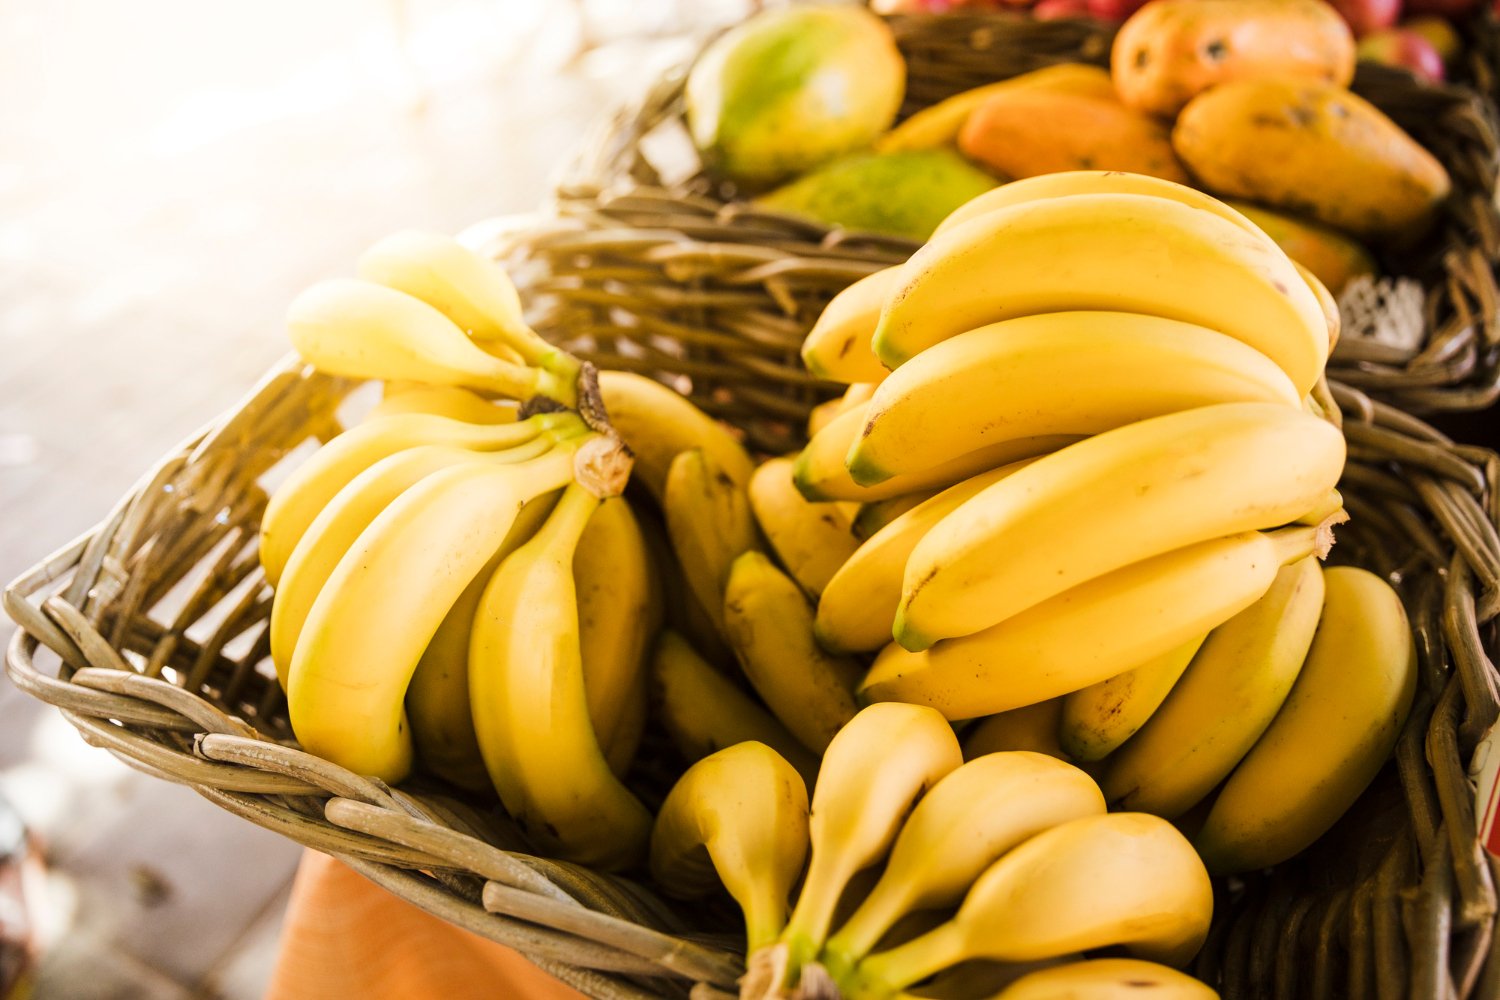 Confira alguns dos diversos benefícios da casca de banana